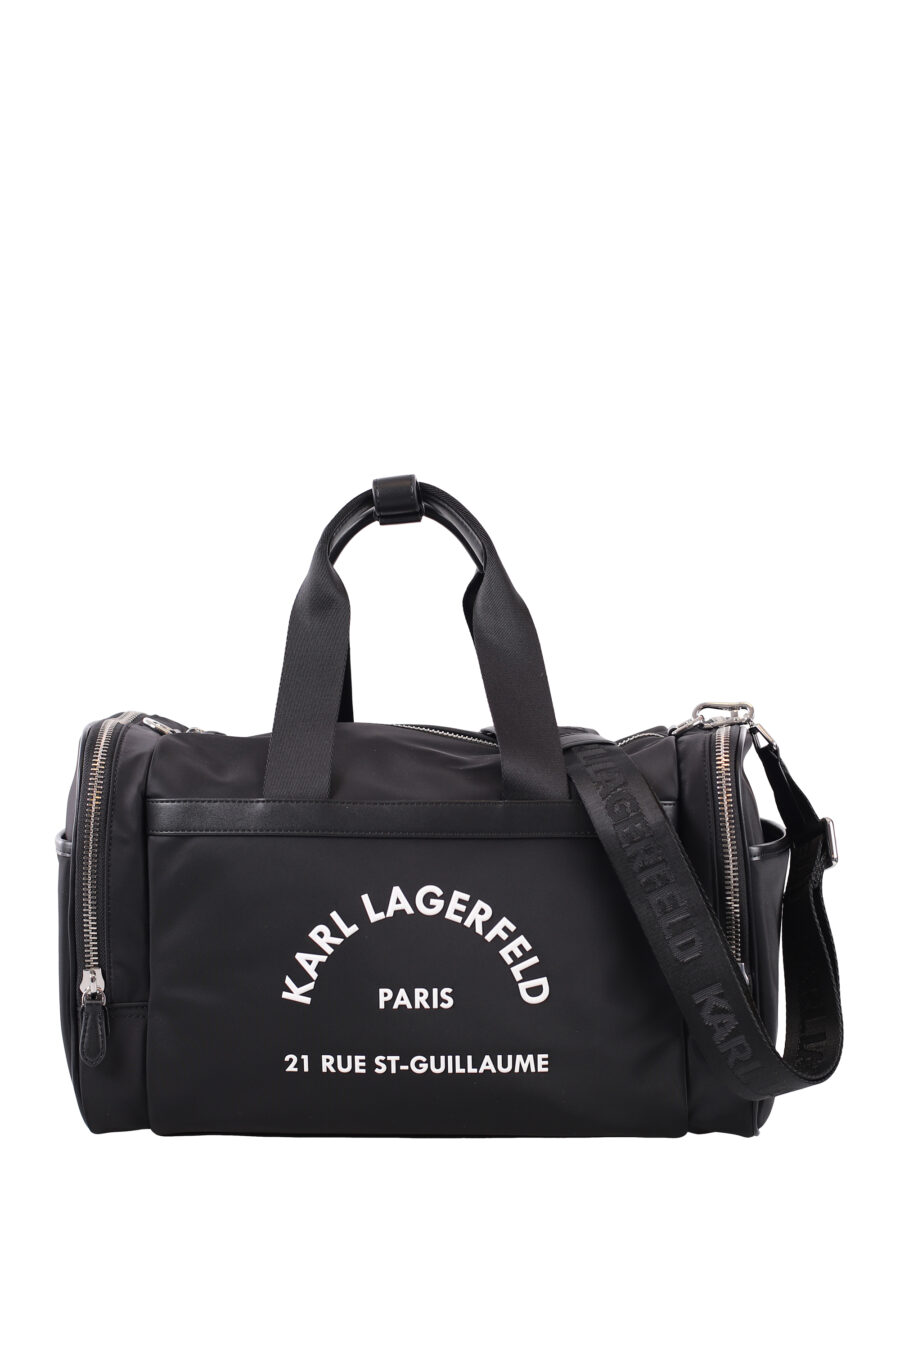 Bolso negro de viaje con logo "rue st-guillaume" - IMG 1630